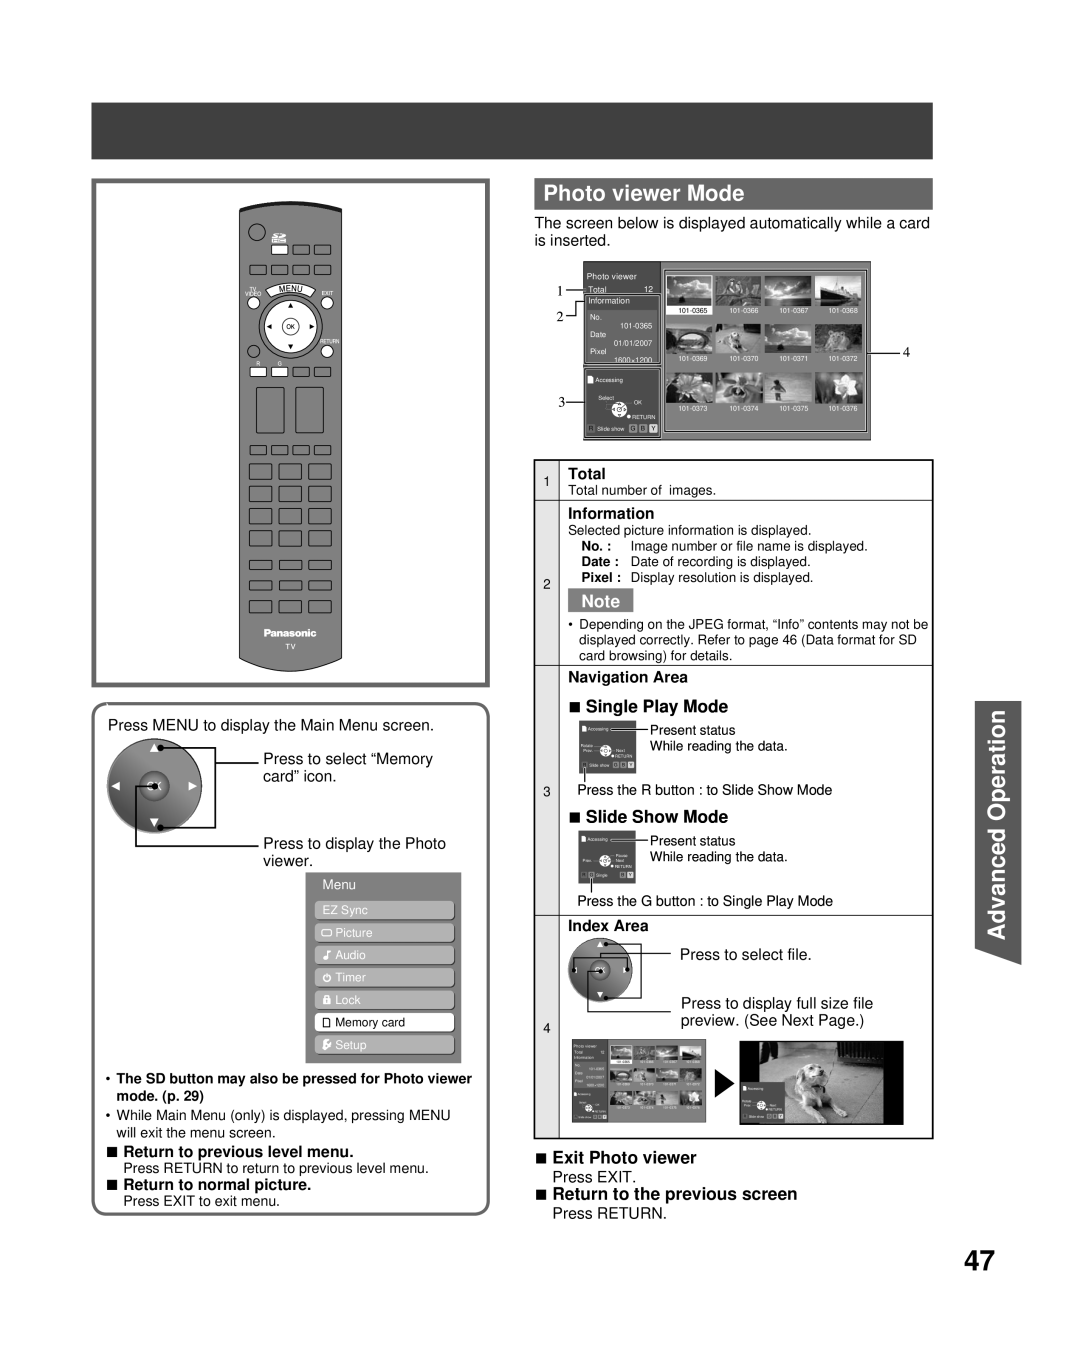 Panasonic PT-50LCZ70 Photo viewer Mode, Single Play Mode, Slide Show Mode, Exit Photo viewer, Advanced Operation, Total 